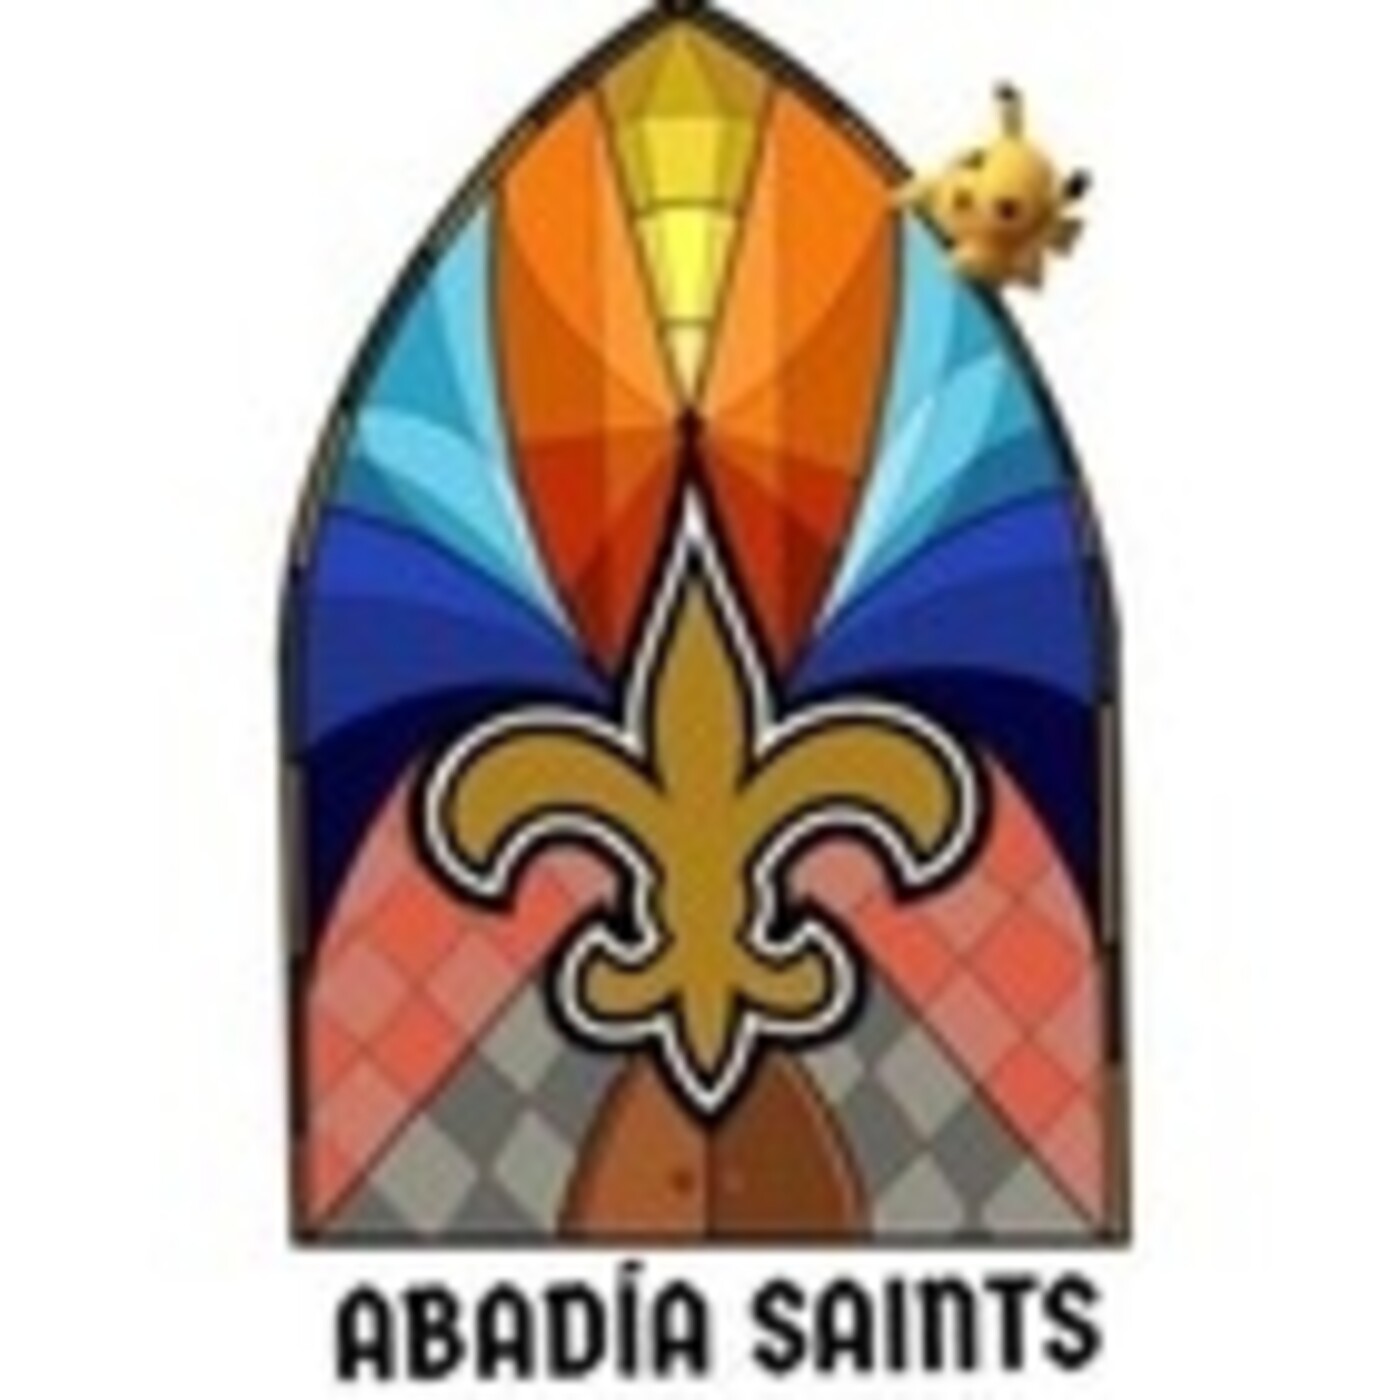 La Abadía Saints 2.0 - Programa 85 - Seguimos vivos